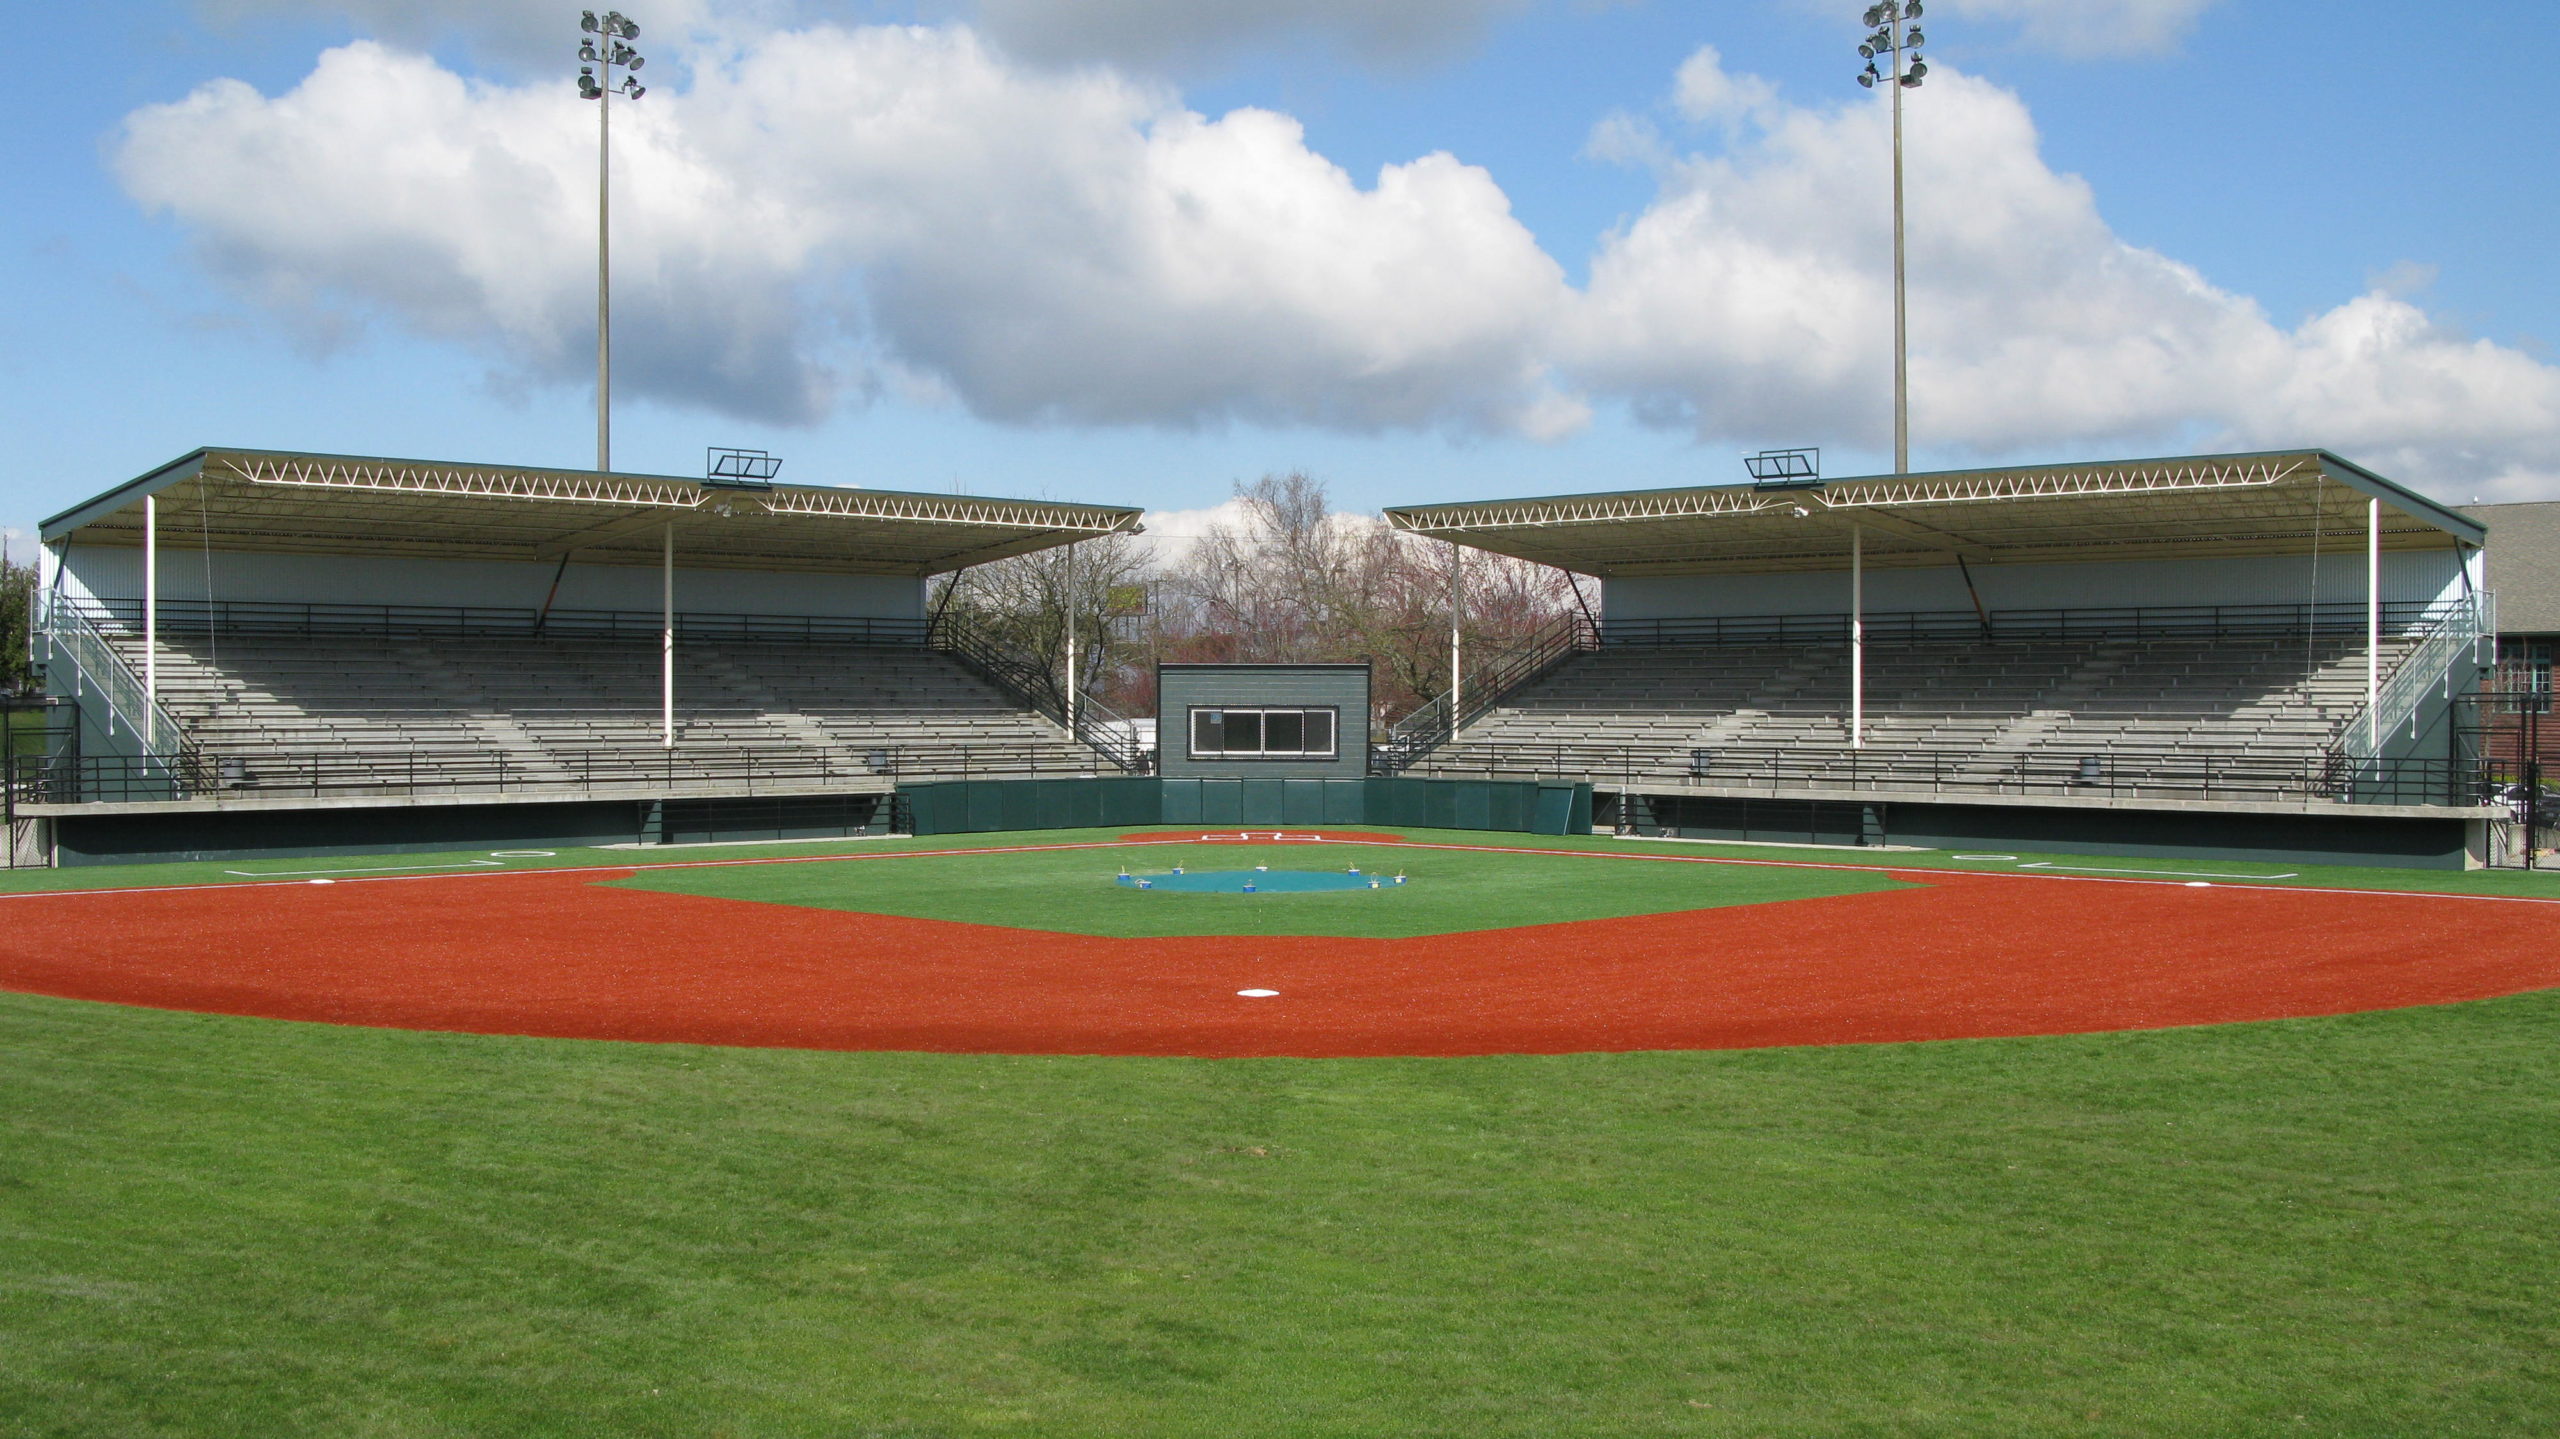 Mel Olson Stadium in White Center, Washington refurbished in 2008.